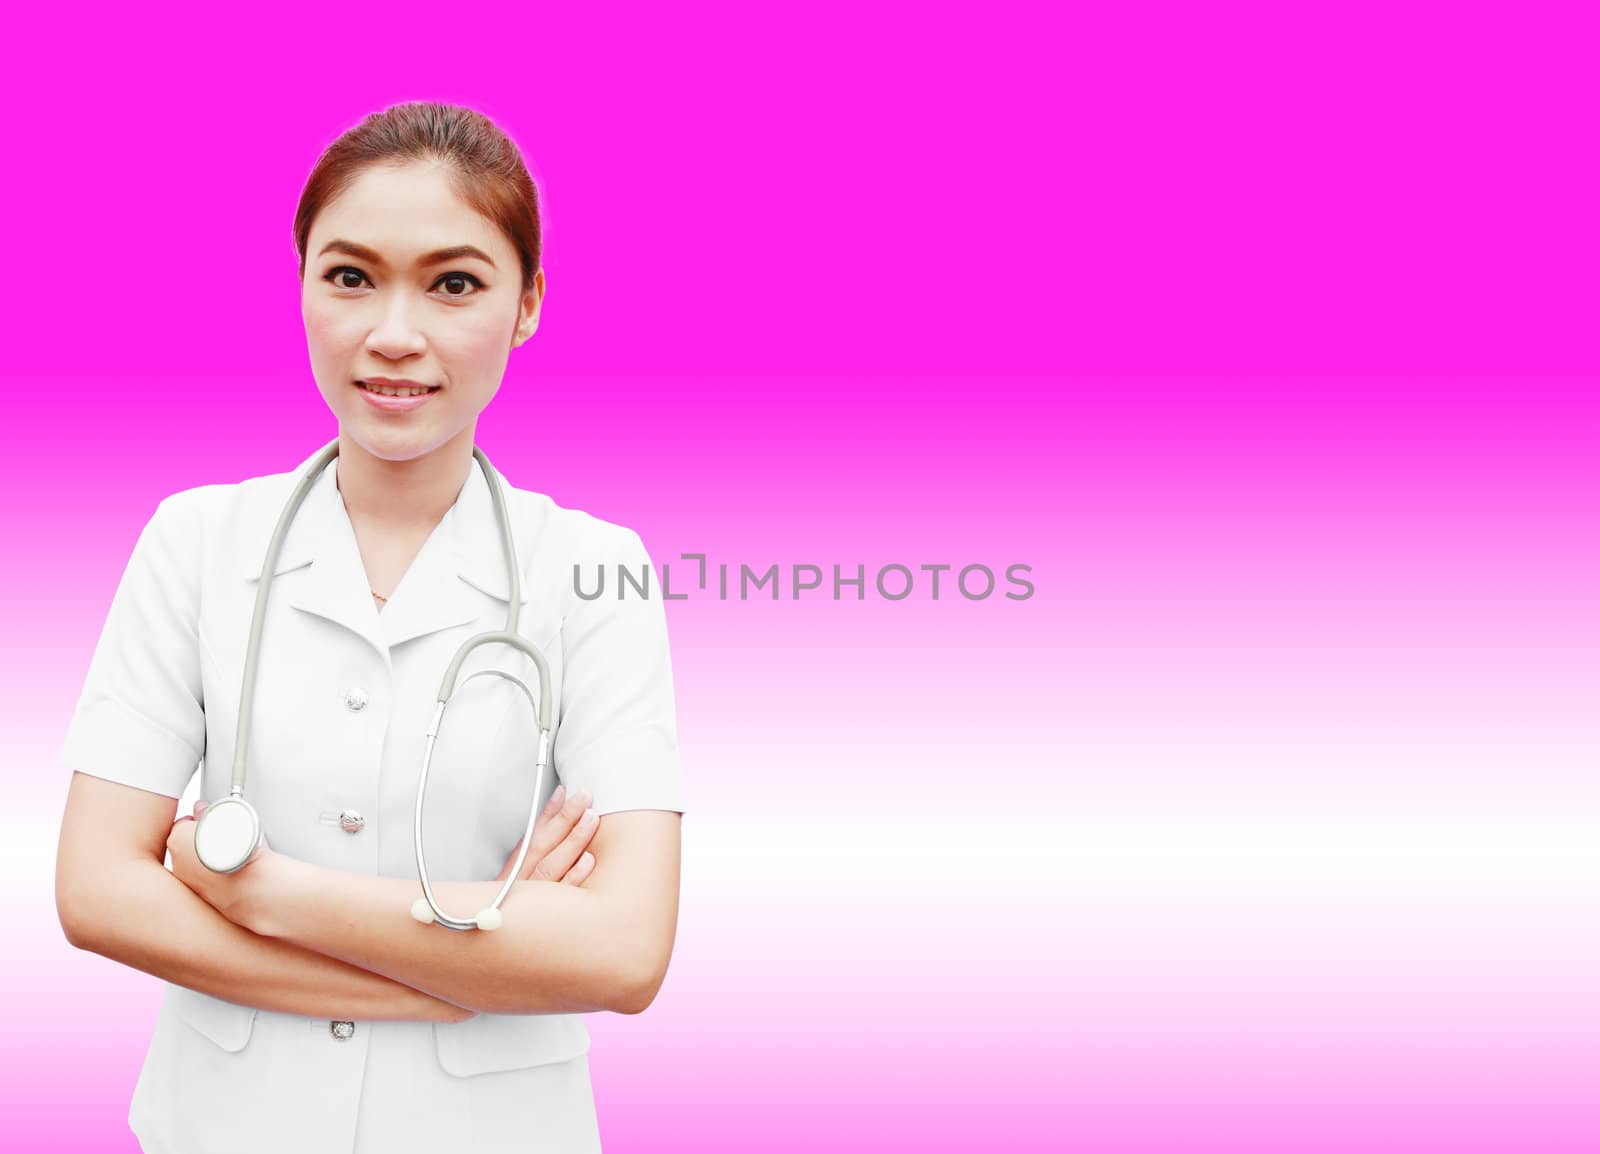 Young nurse with stethoscope by geargodz